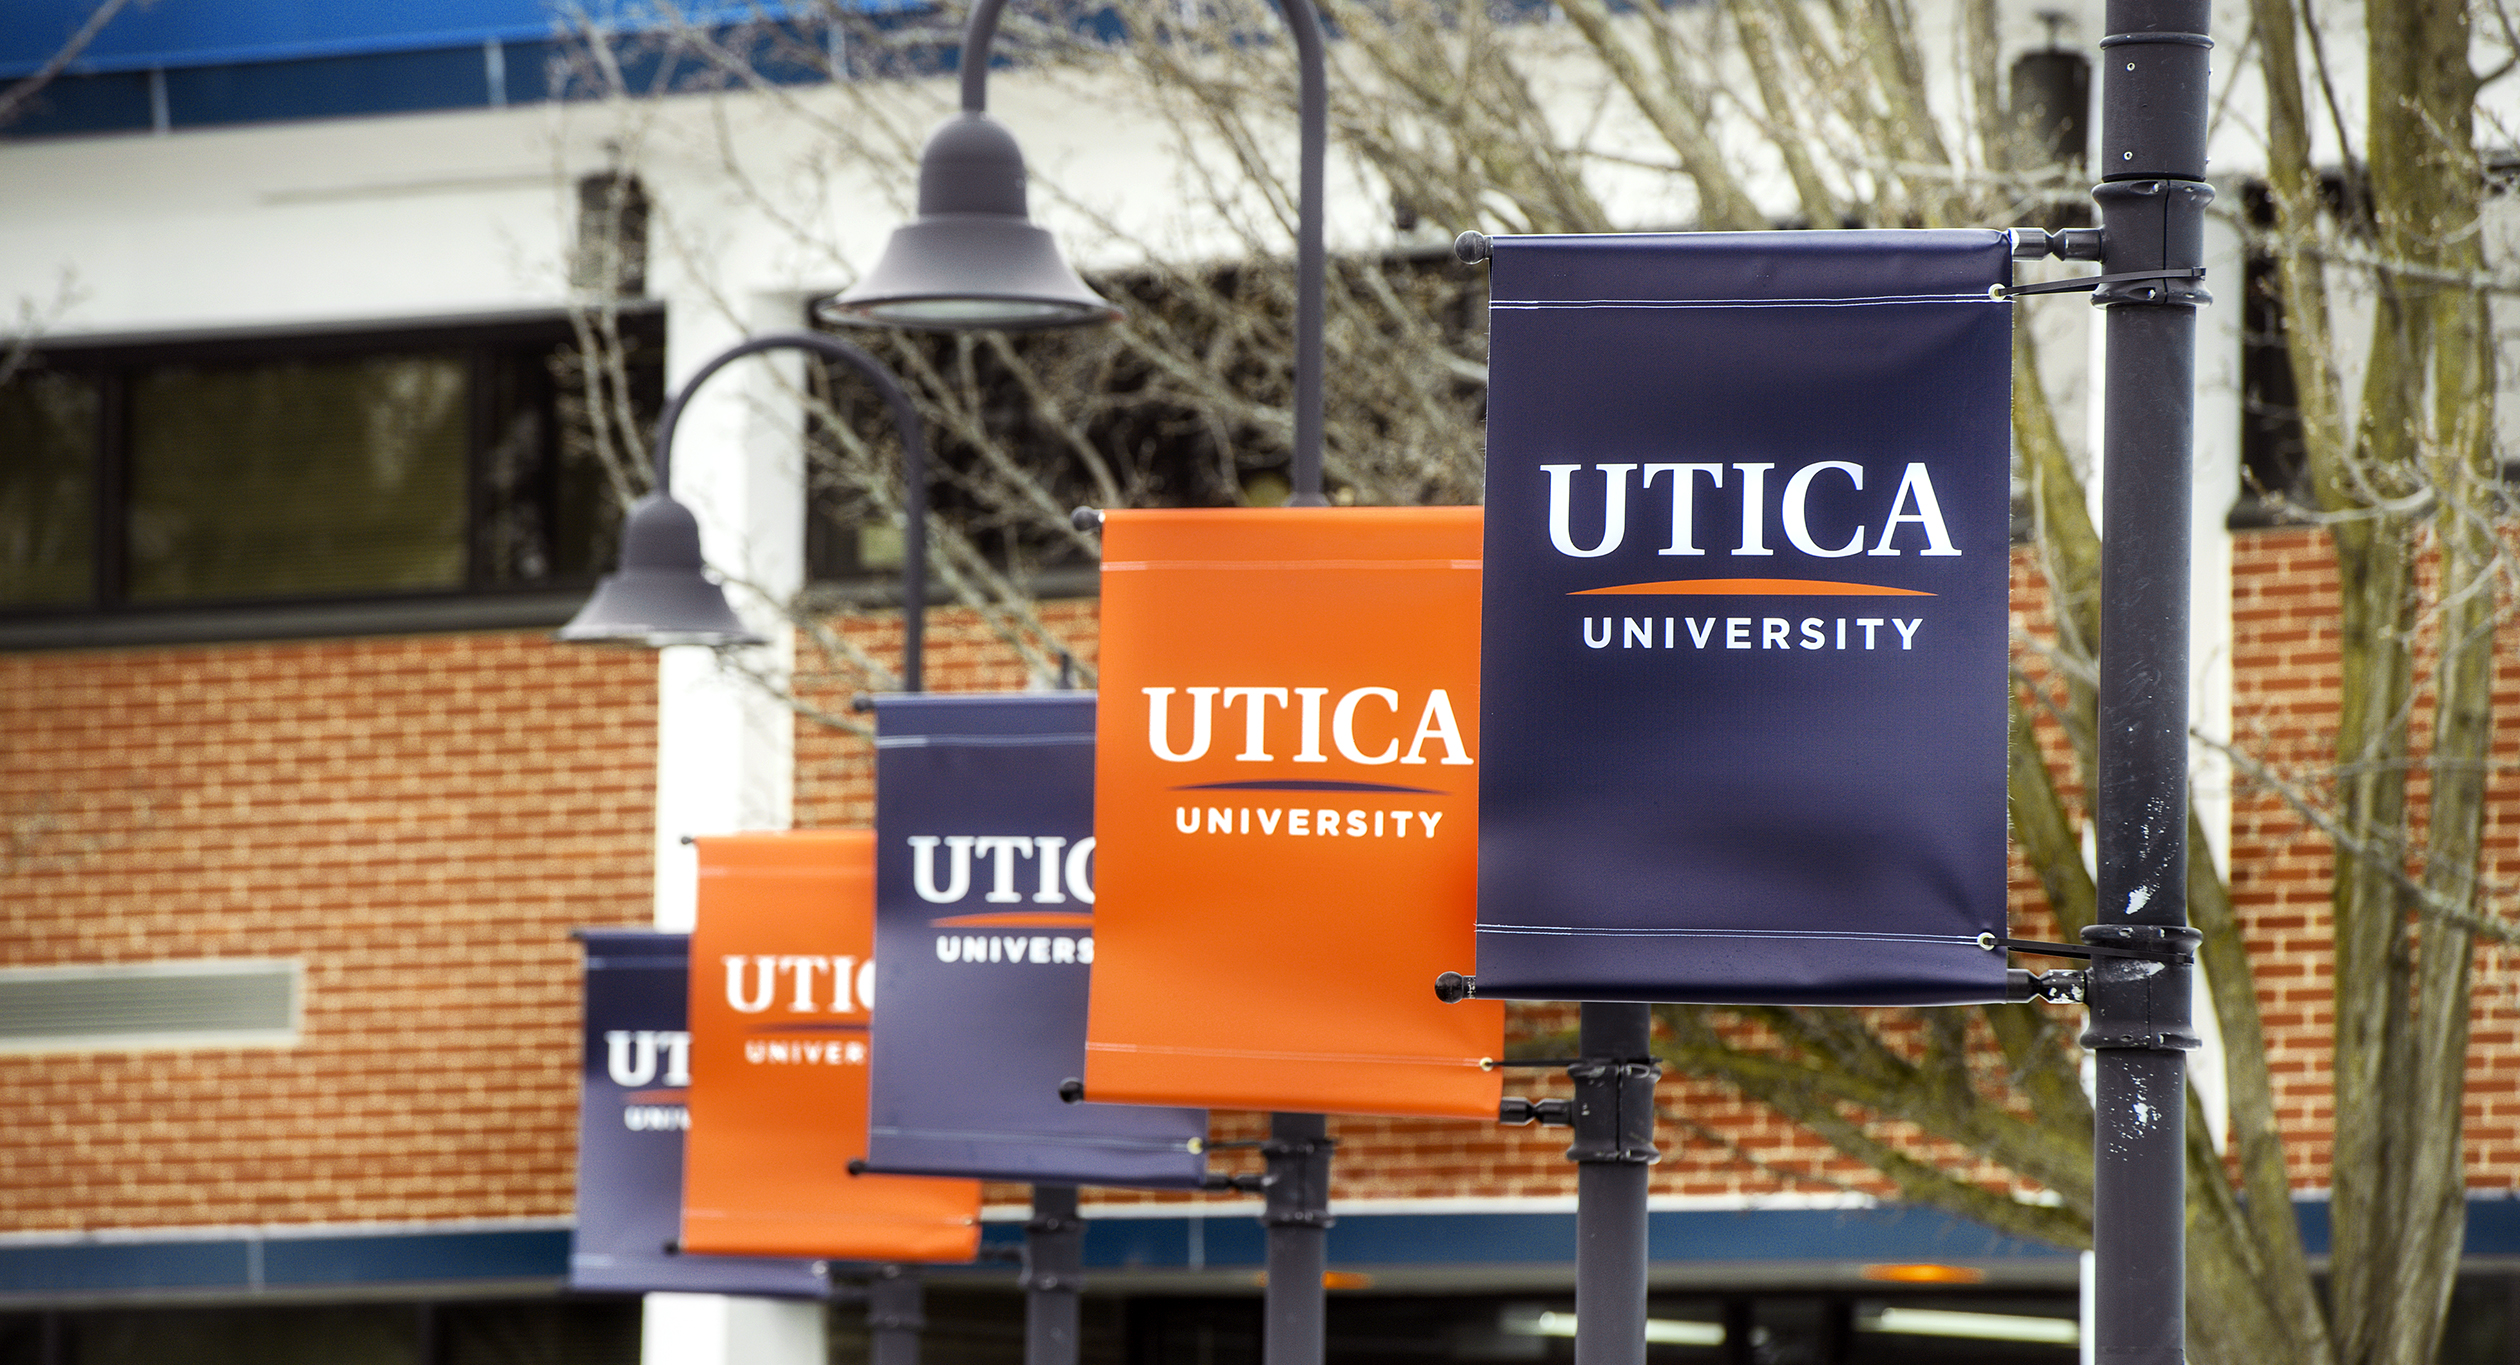 Institutional Research at Utica University